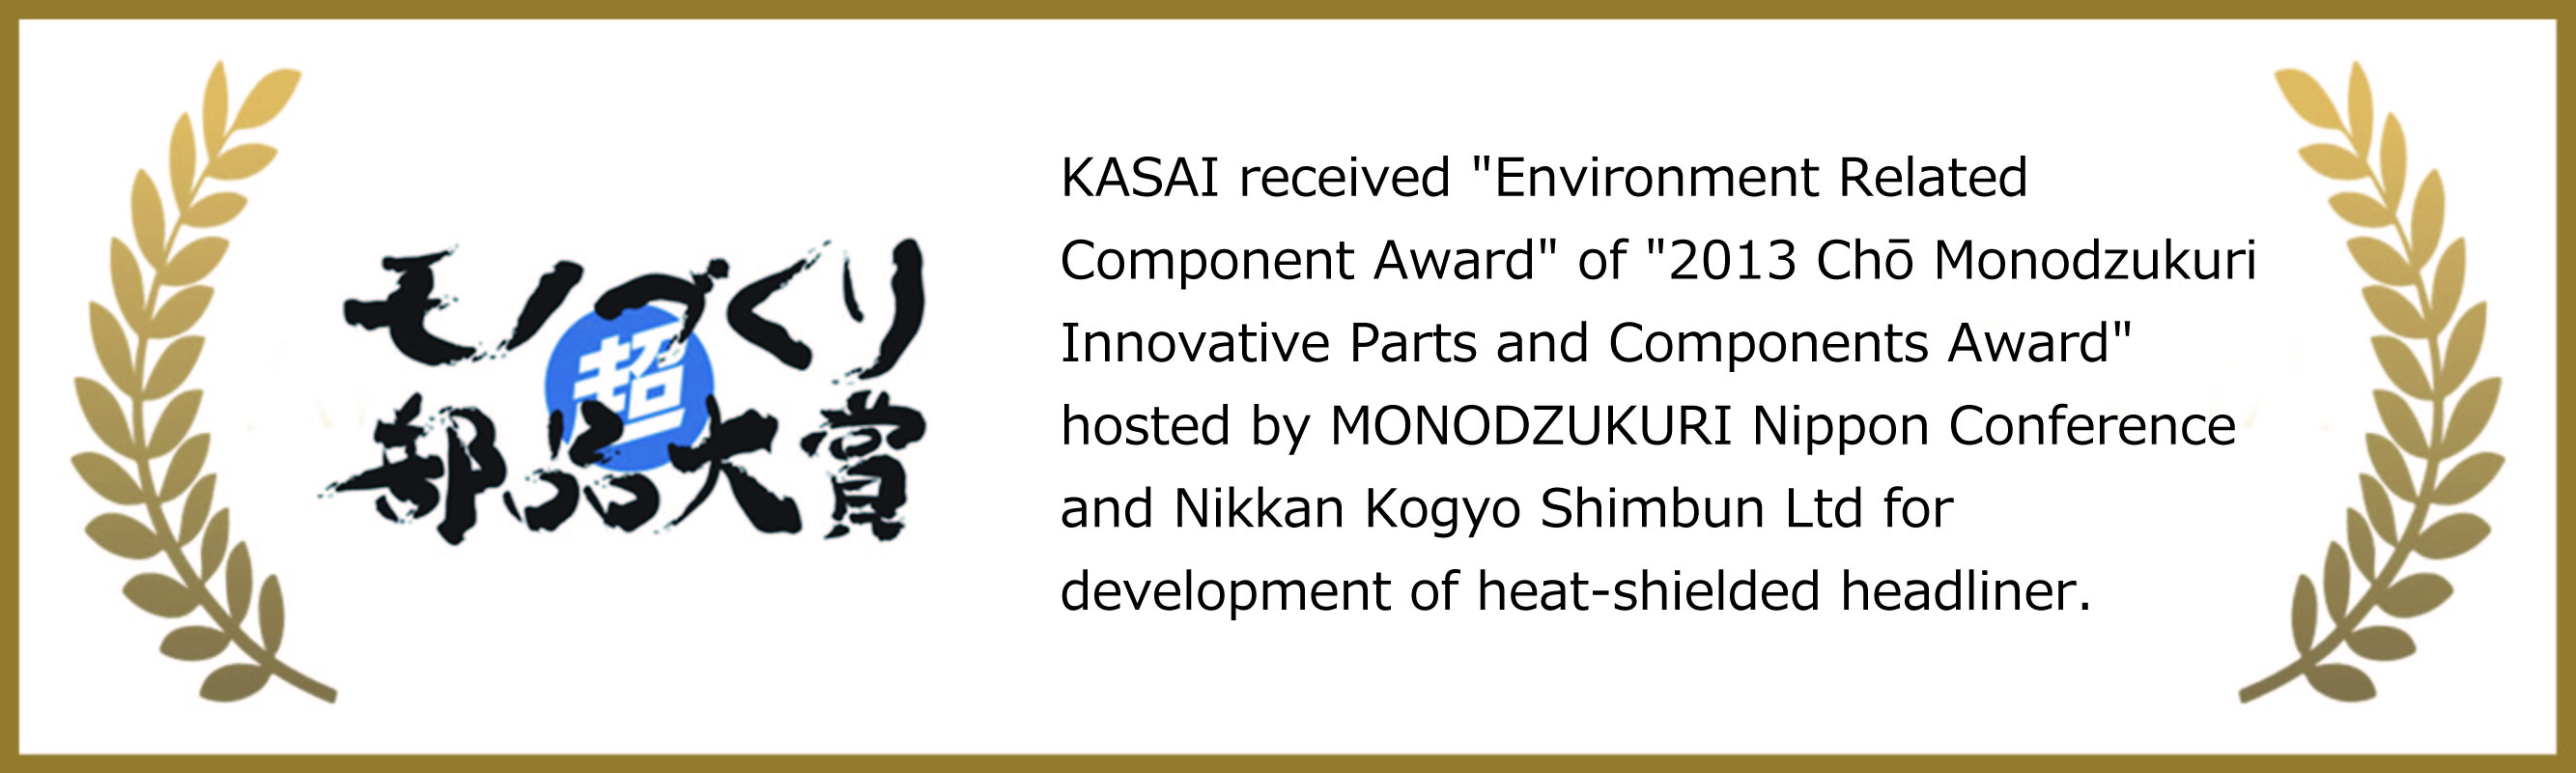 KASAI received 'Environment Related Component Award' of '2013 Chō Monodzukuri Innovative Parts and Components Award' hosted by MONODZUKURI Nippon Conference and Nikkan Kogyo Shimbun Ltd for development of heat-shielded headliner.